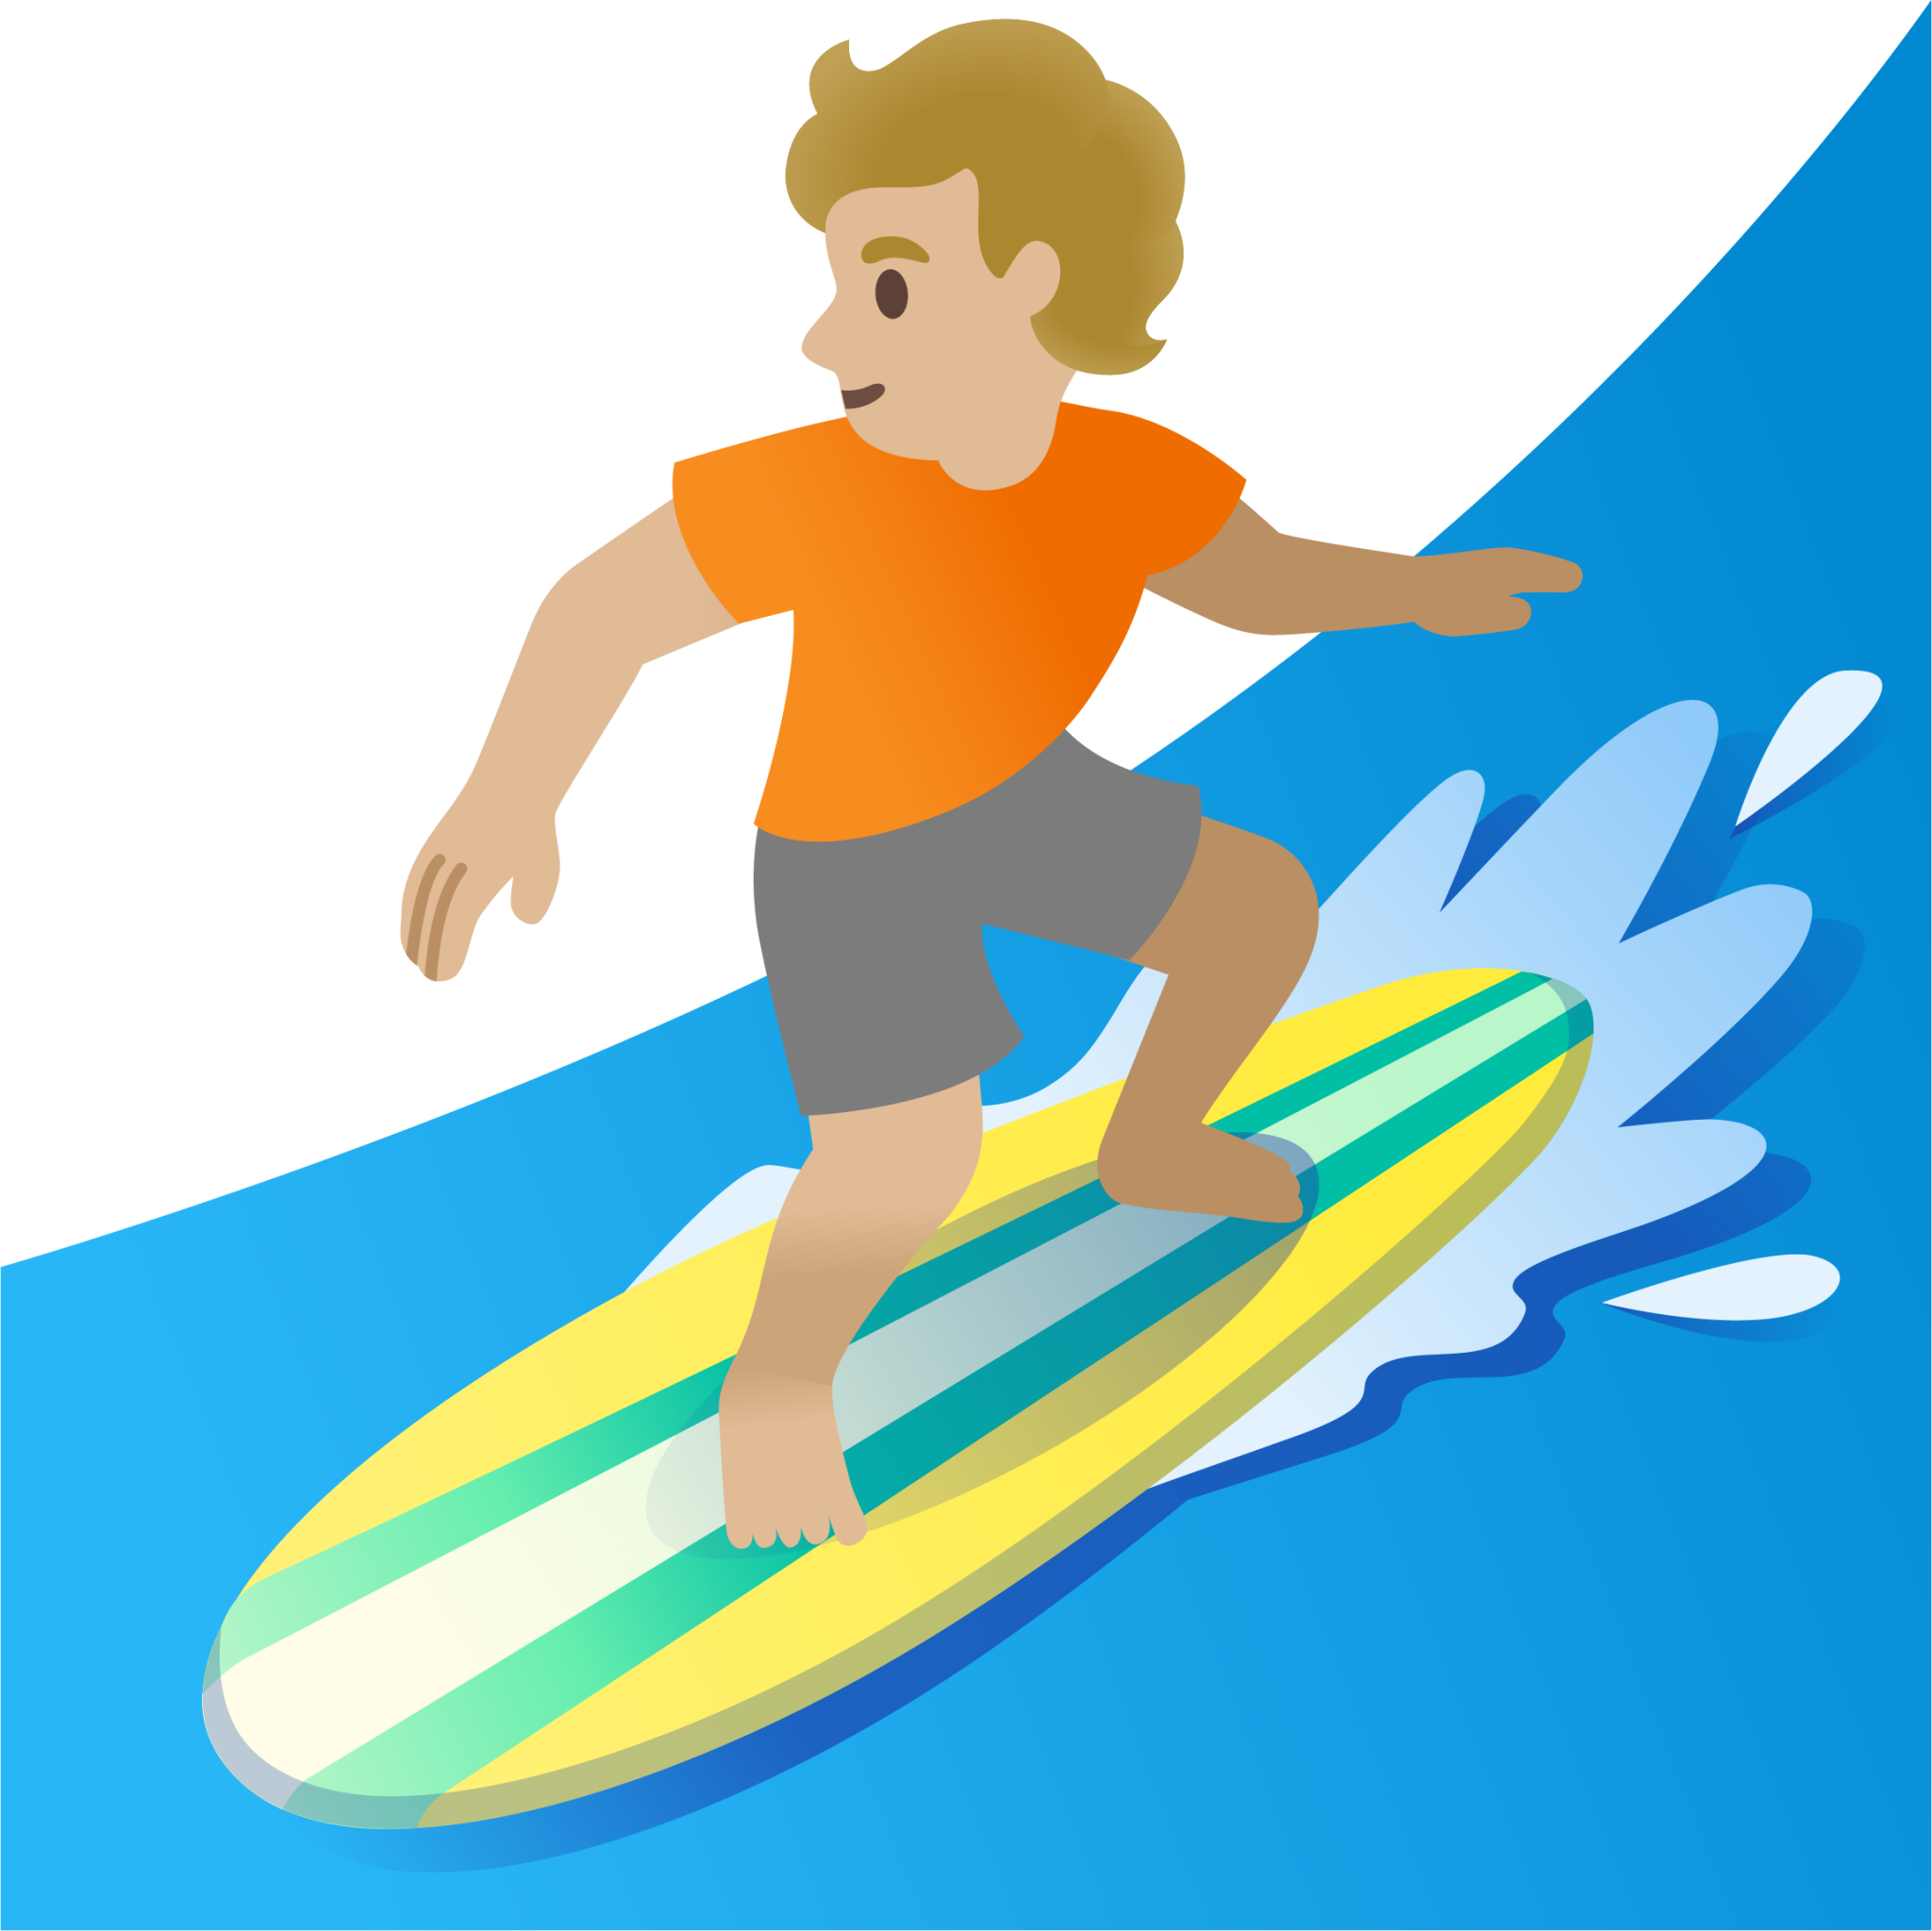 person surfing: medium-light skin tone emoji